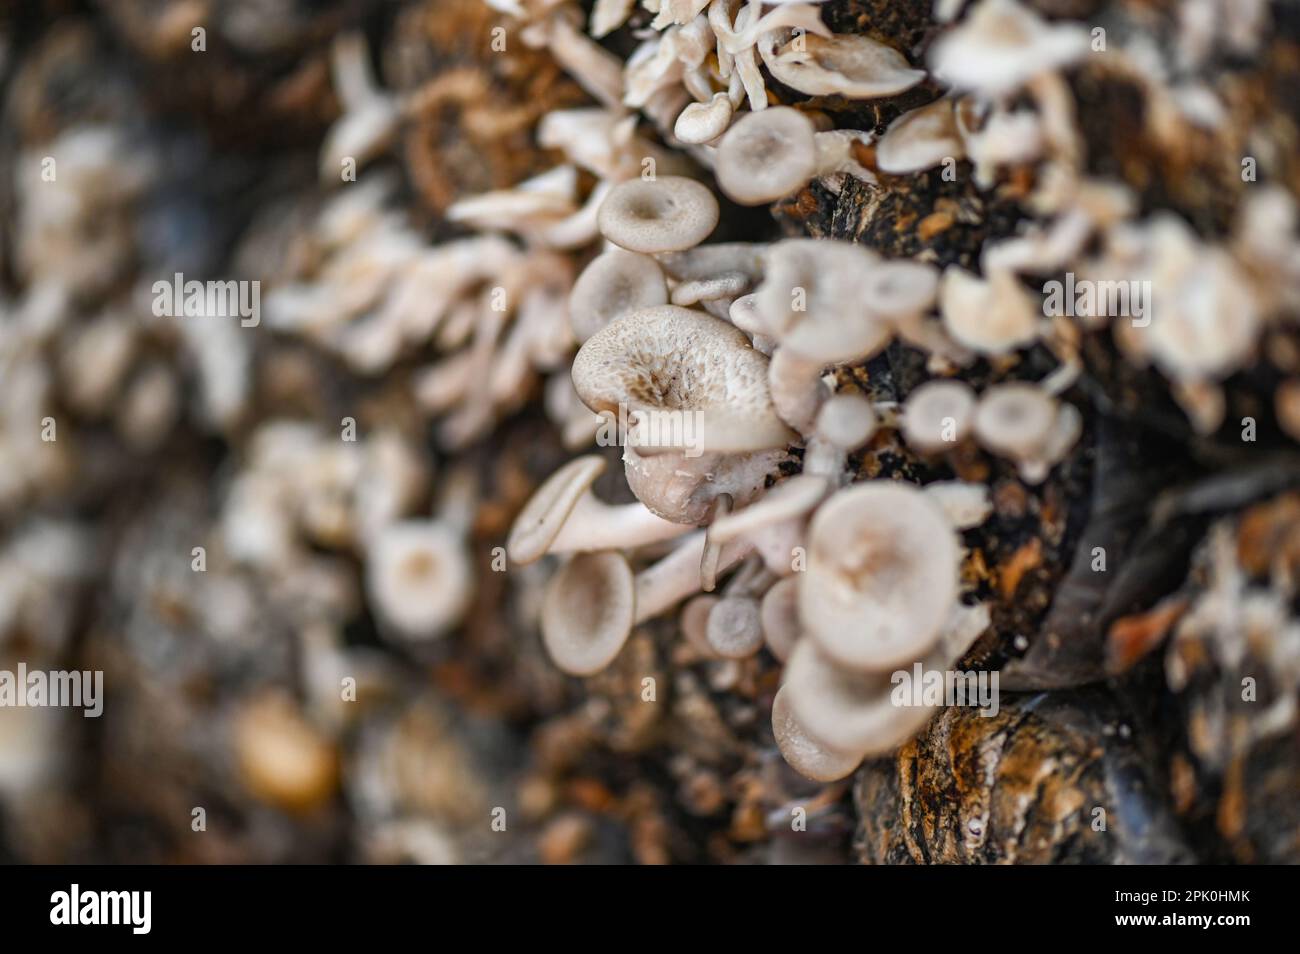 mushroom farm with fresh mushroom growing on mushroom spawn - Lentinus squarrosulus Stock Photo